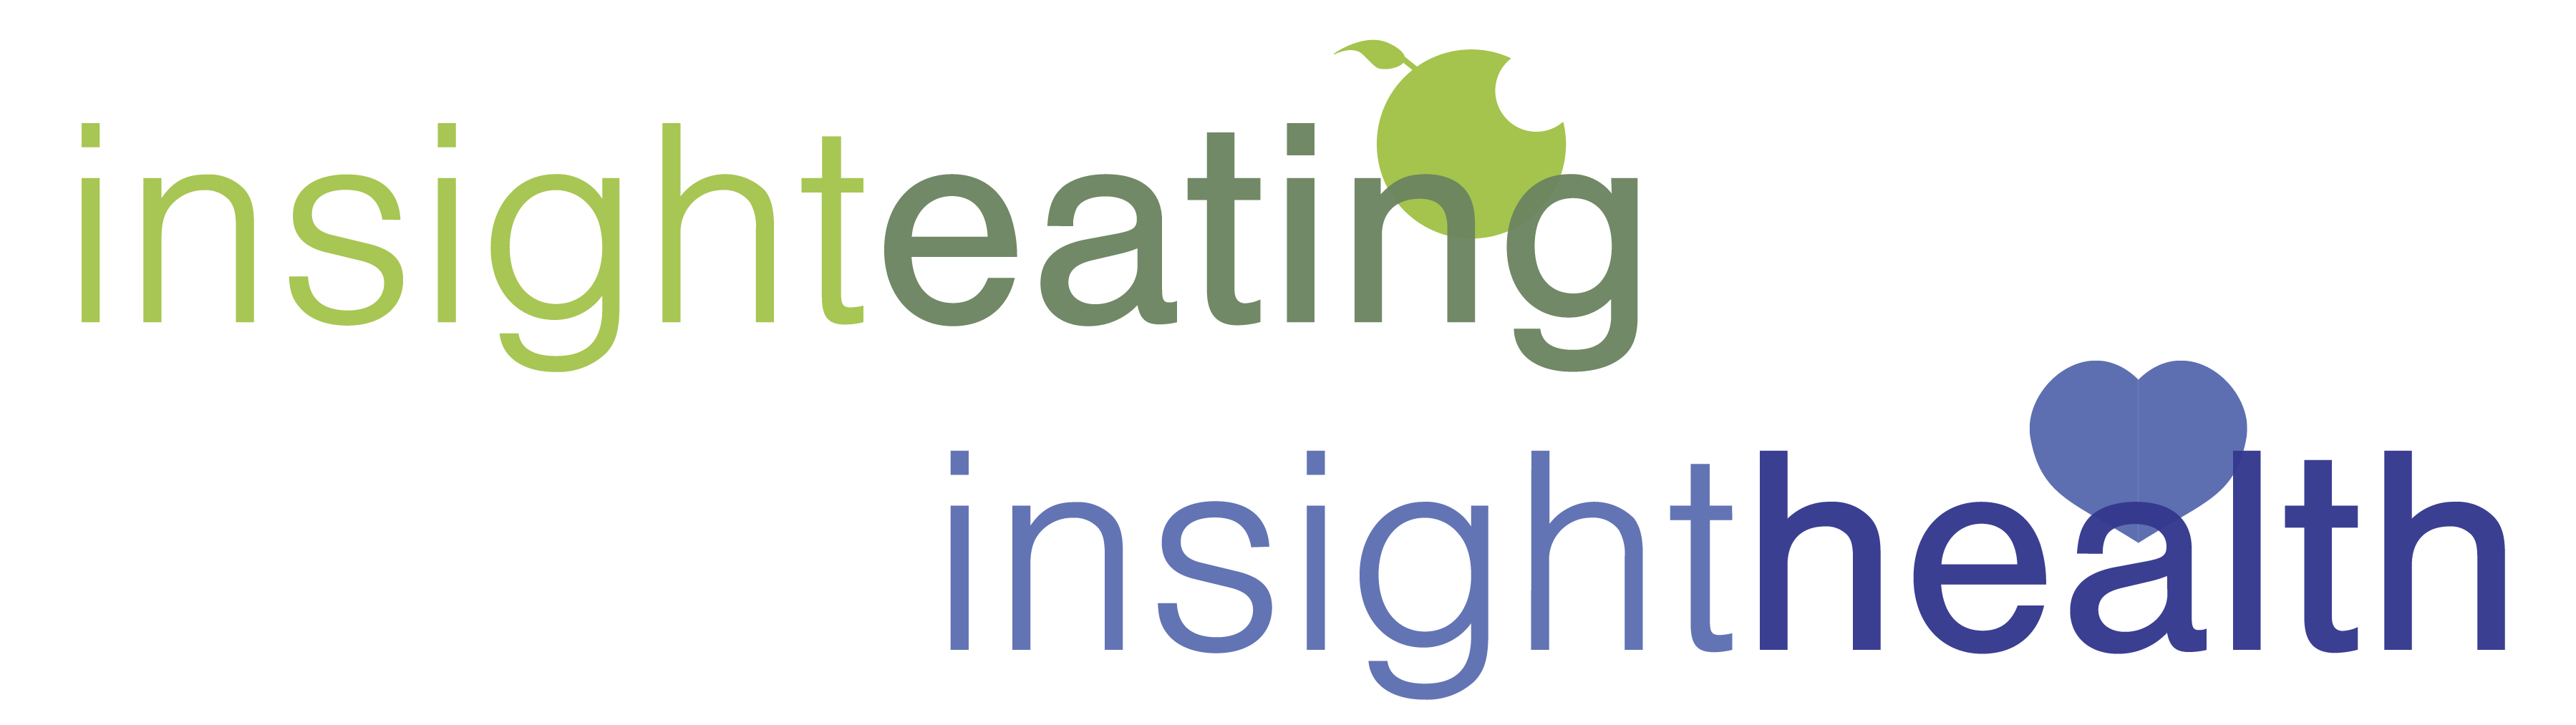 insight eating insight health header text